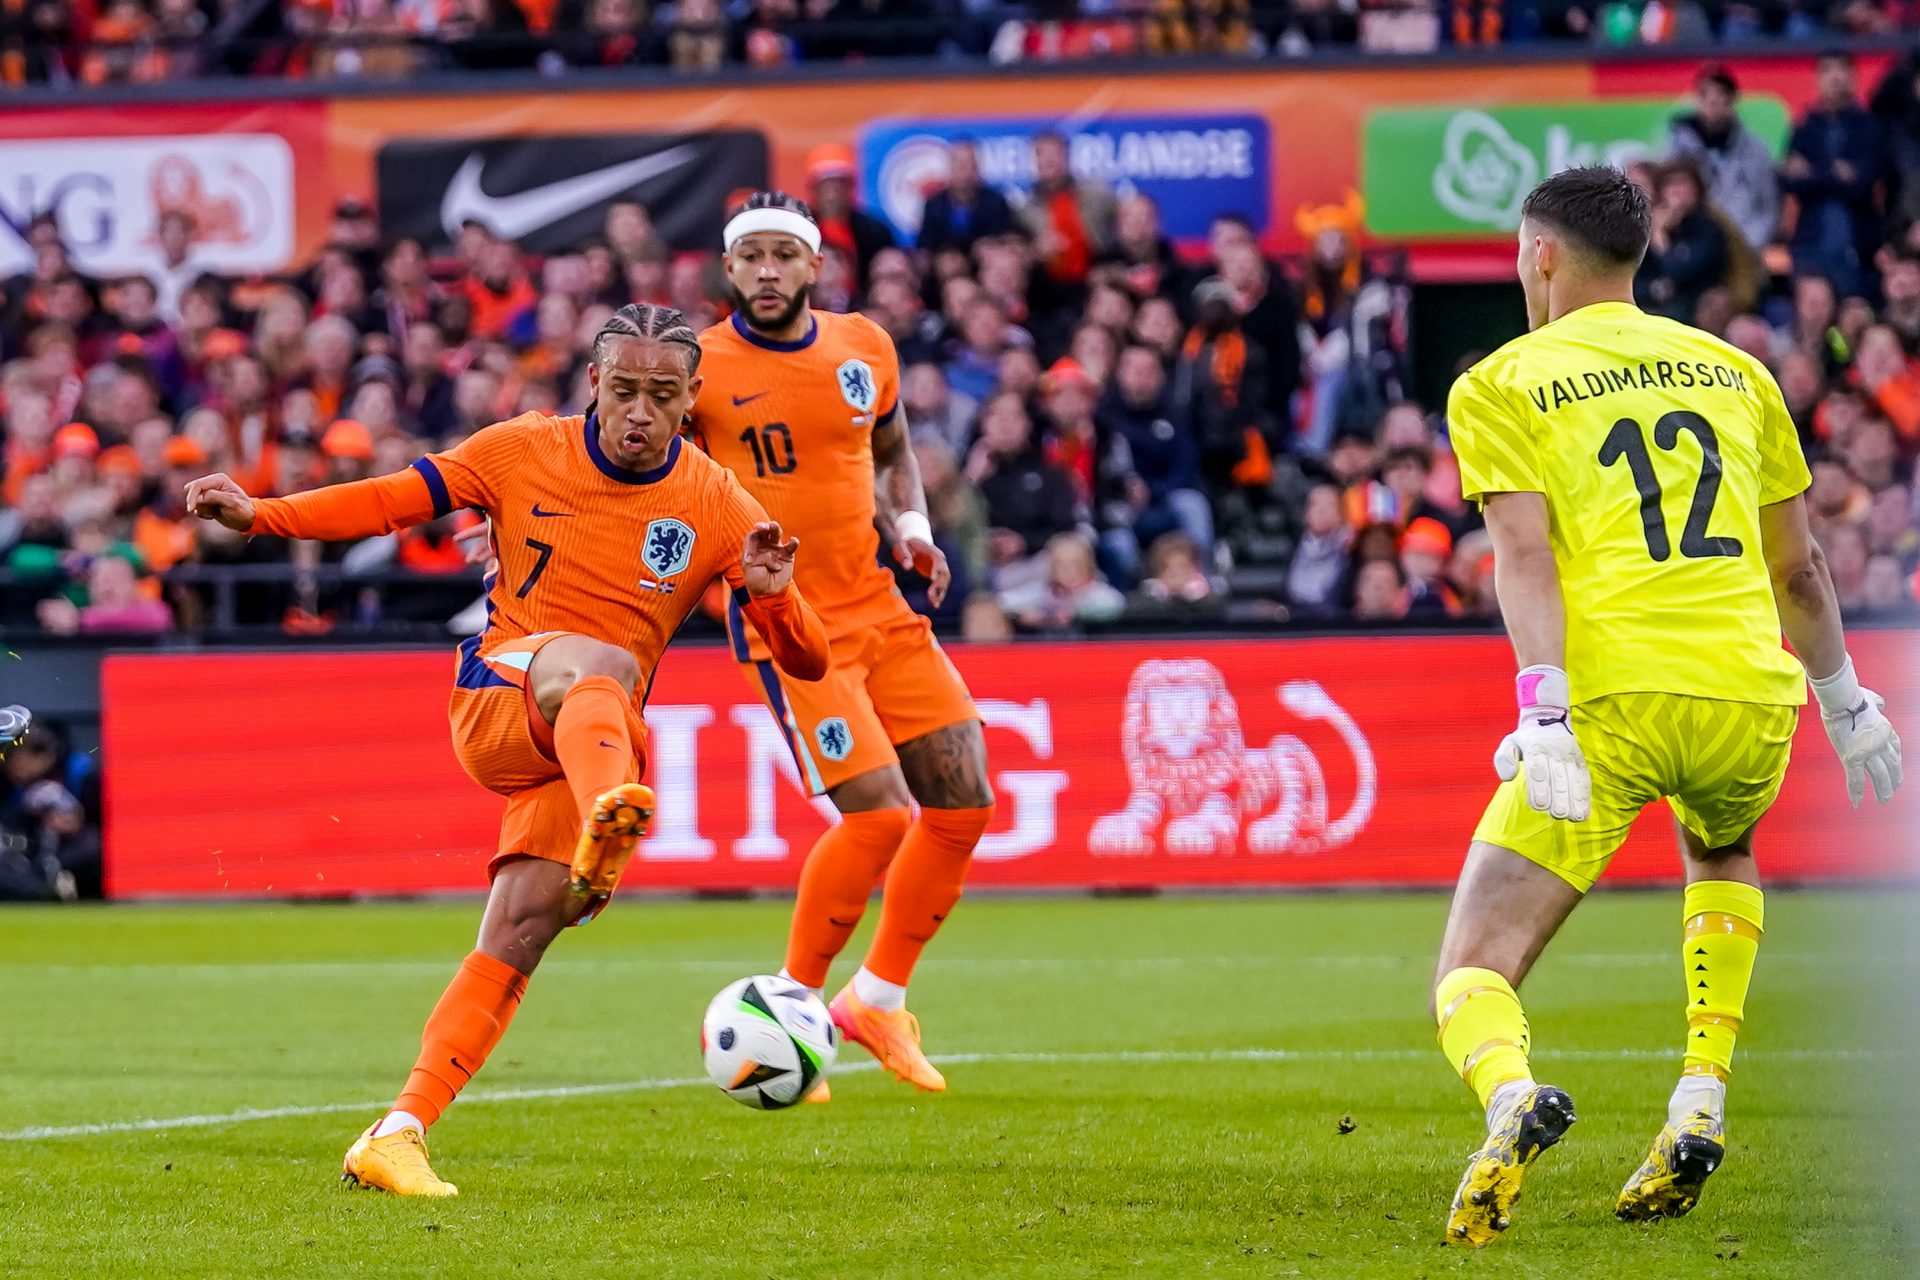 Oranje nostalgie: Wesley Sneijder, de beste middenvelder ooit?